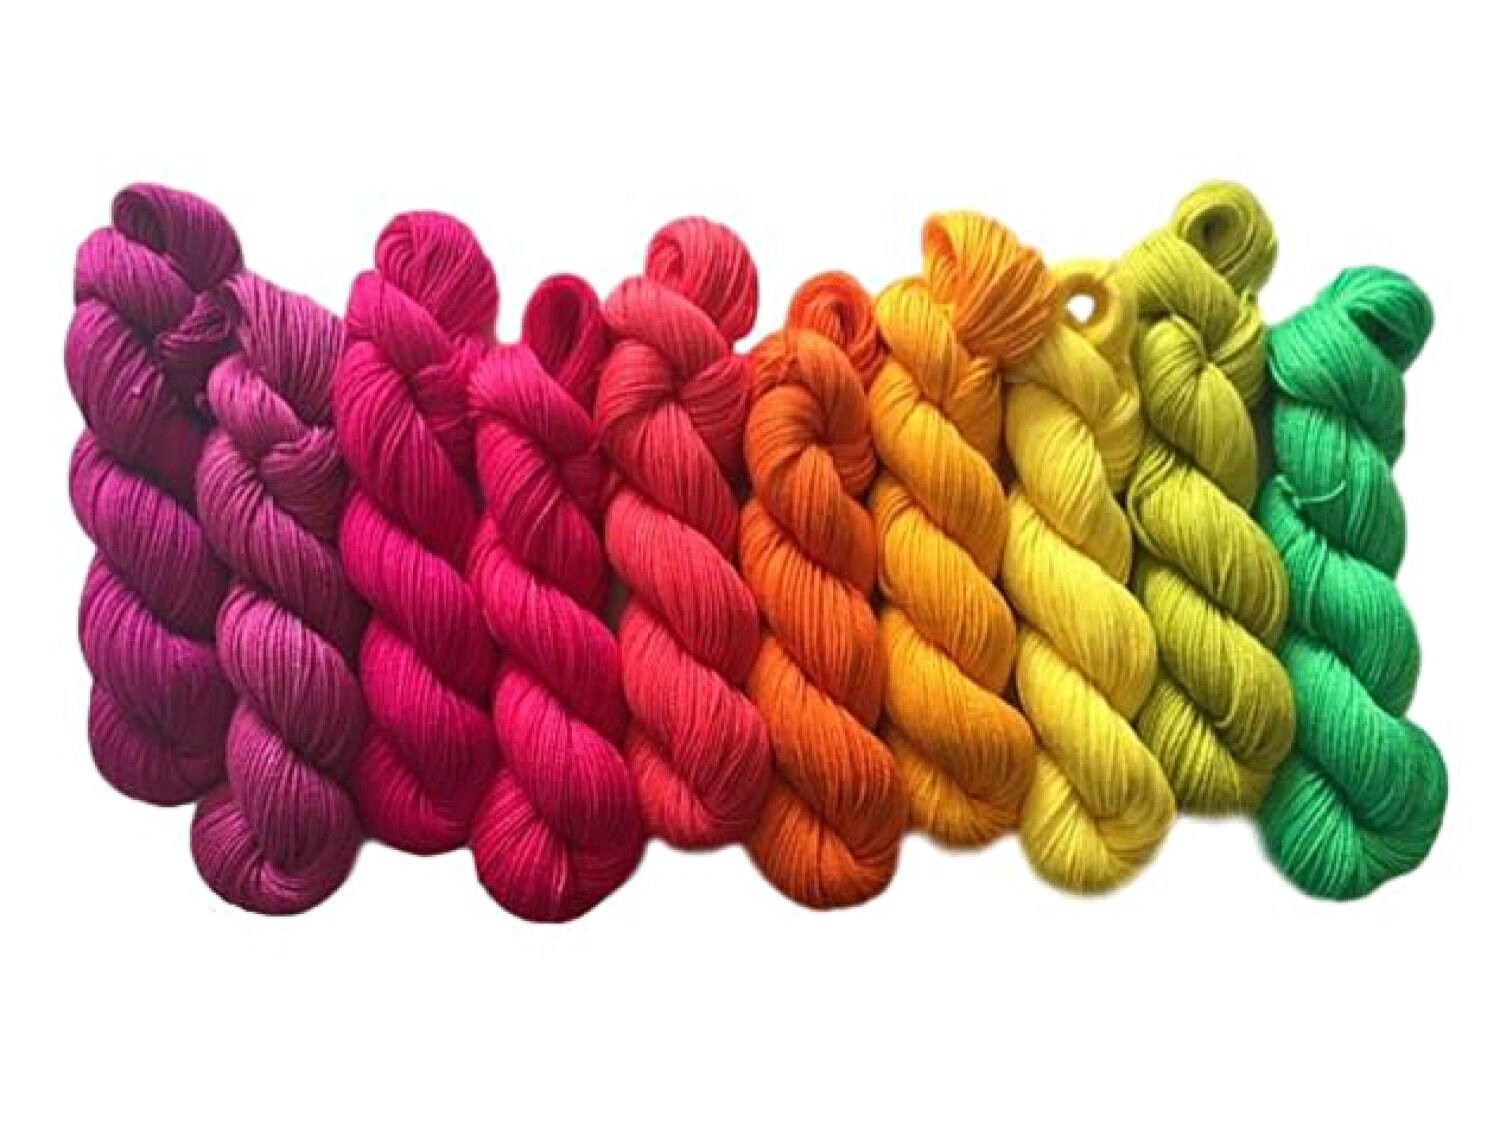 Vegan Yarn Kit - Fingering / Sock Weight Bamboo Cotton - Hand Dyed Semi Solid Thread - Crochet and Knitting Fiber - Soft 3 Ply Shawl Yarn